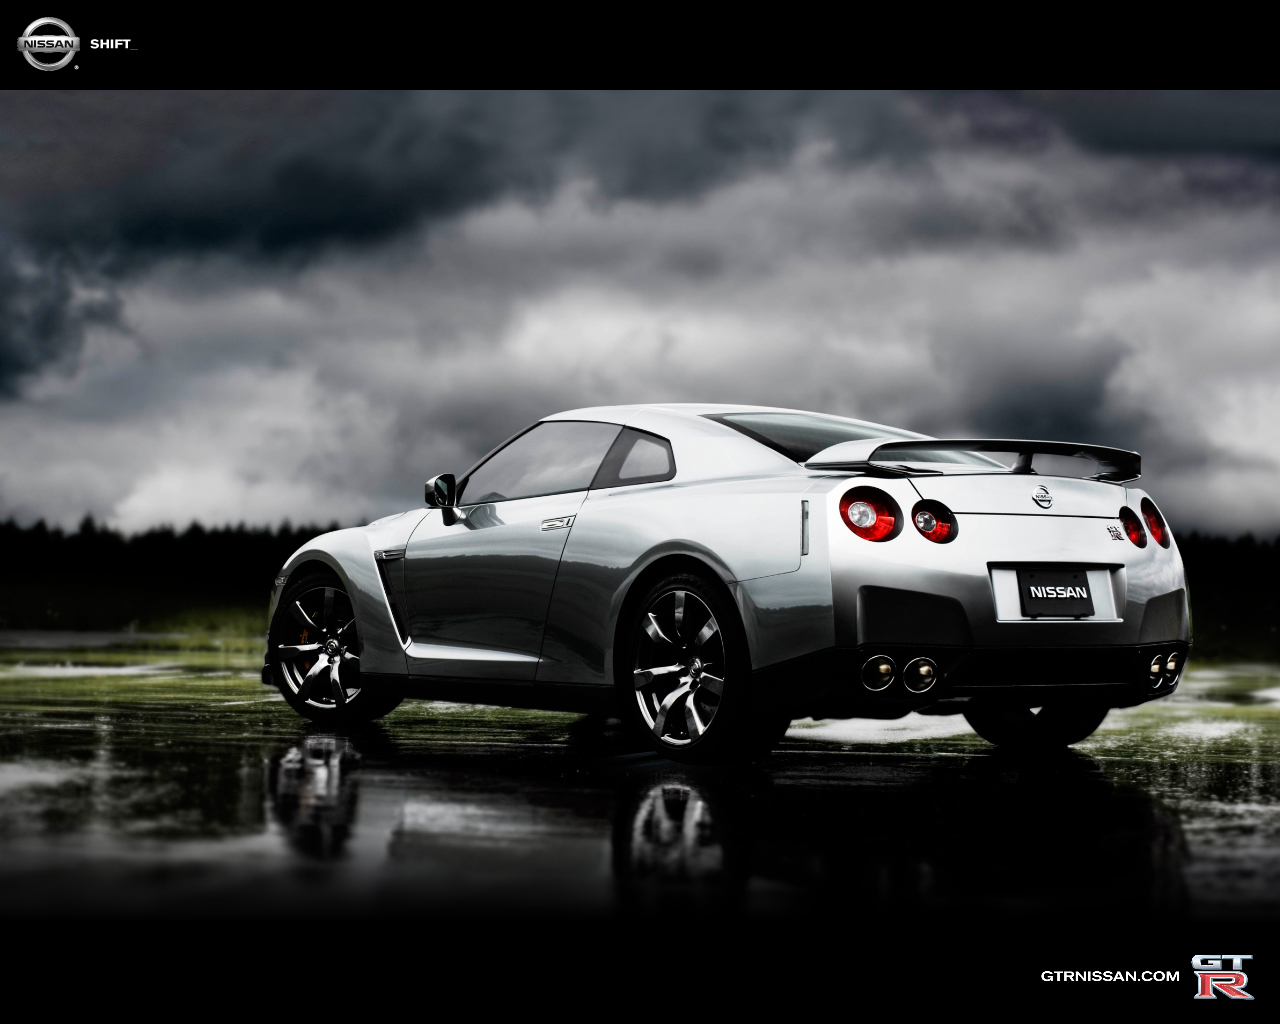 CAR CC: Nissan gtr wallpaper car blog offers best car models, designs, reviews ...1280 x 1024